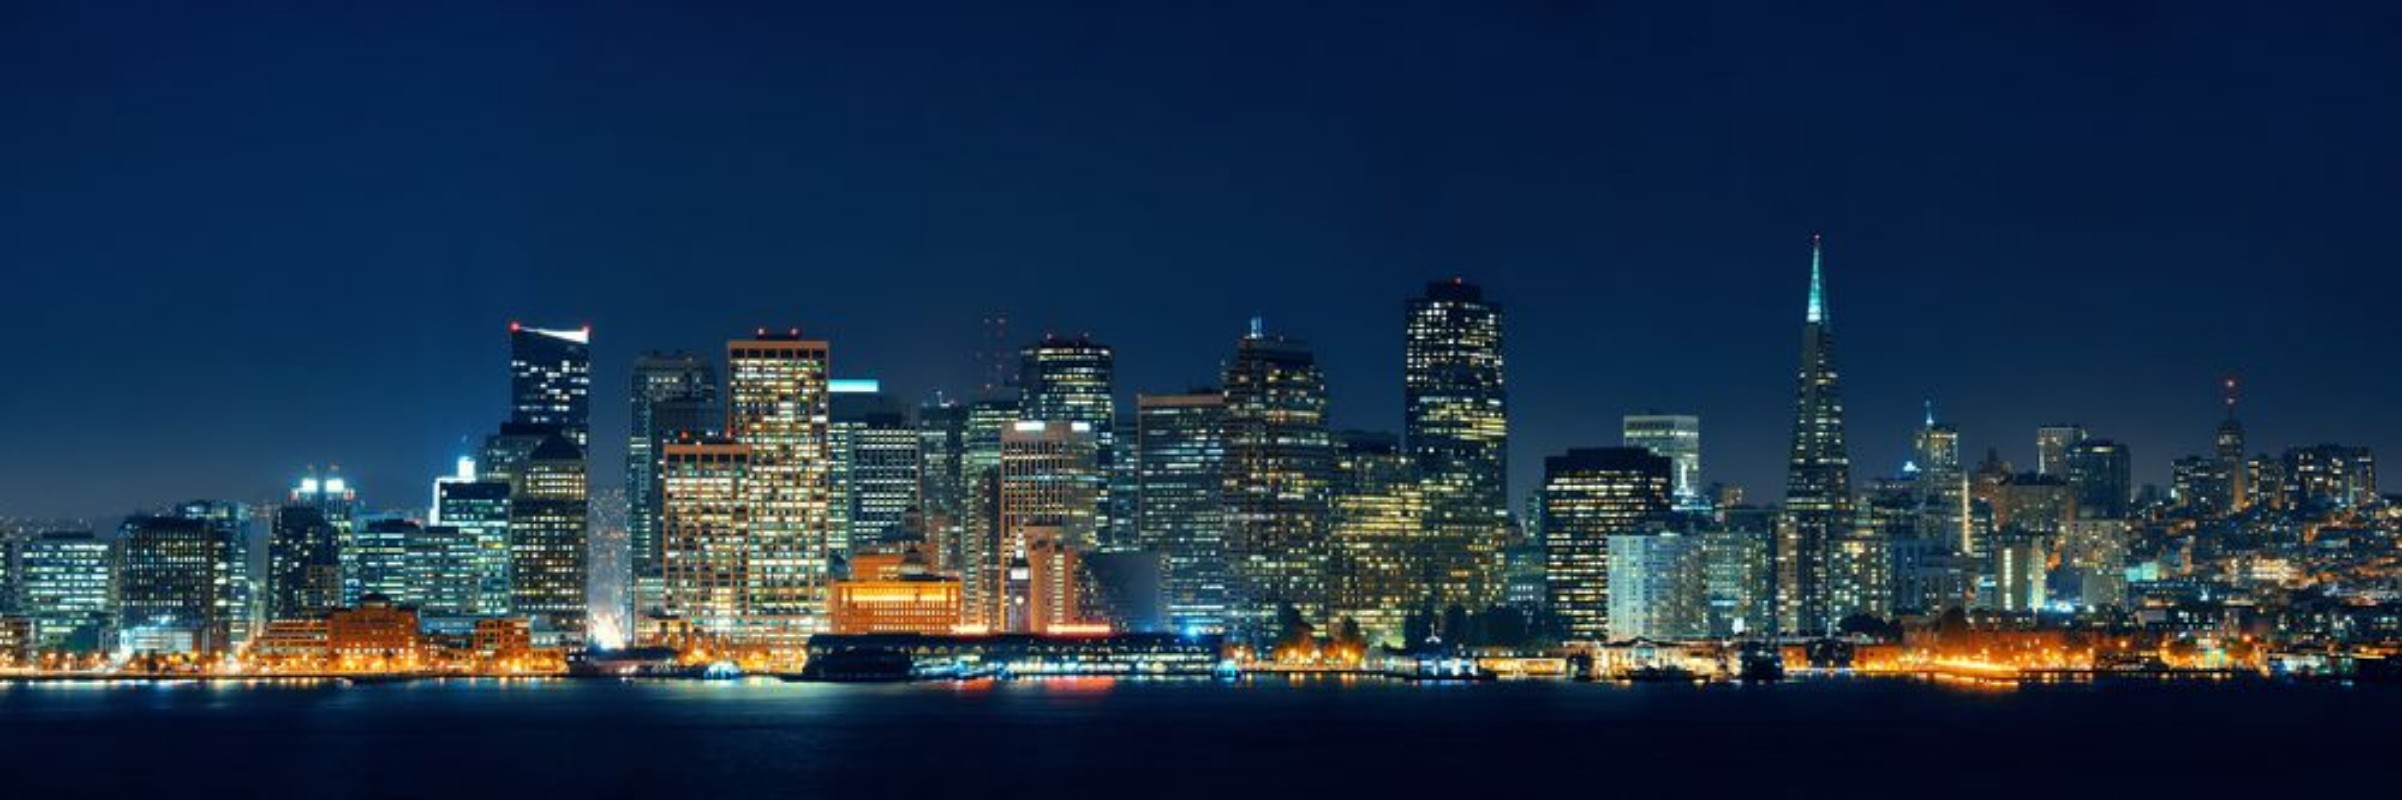 Image de San Francisco skyline